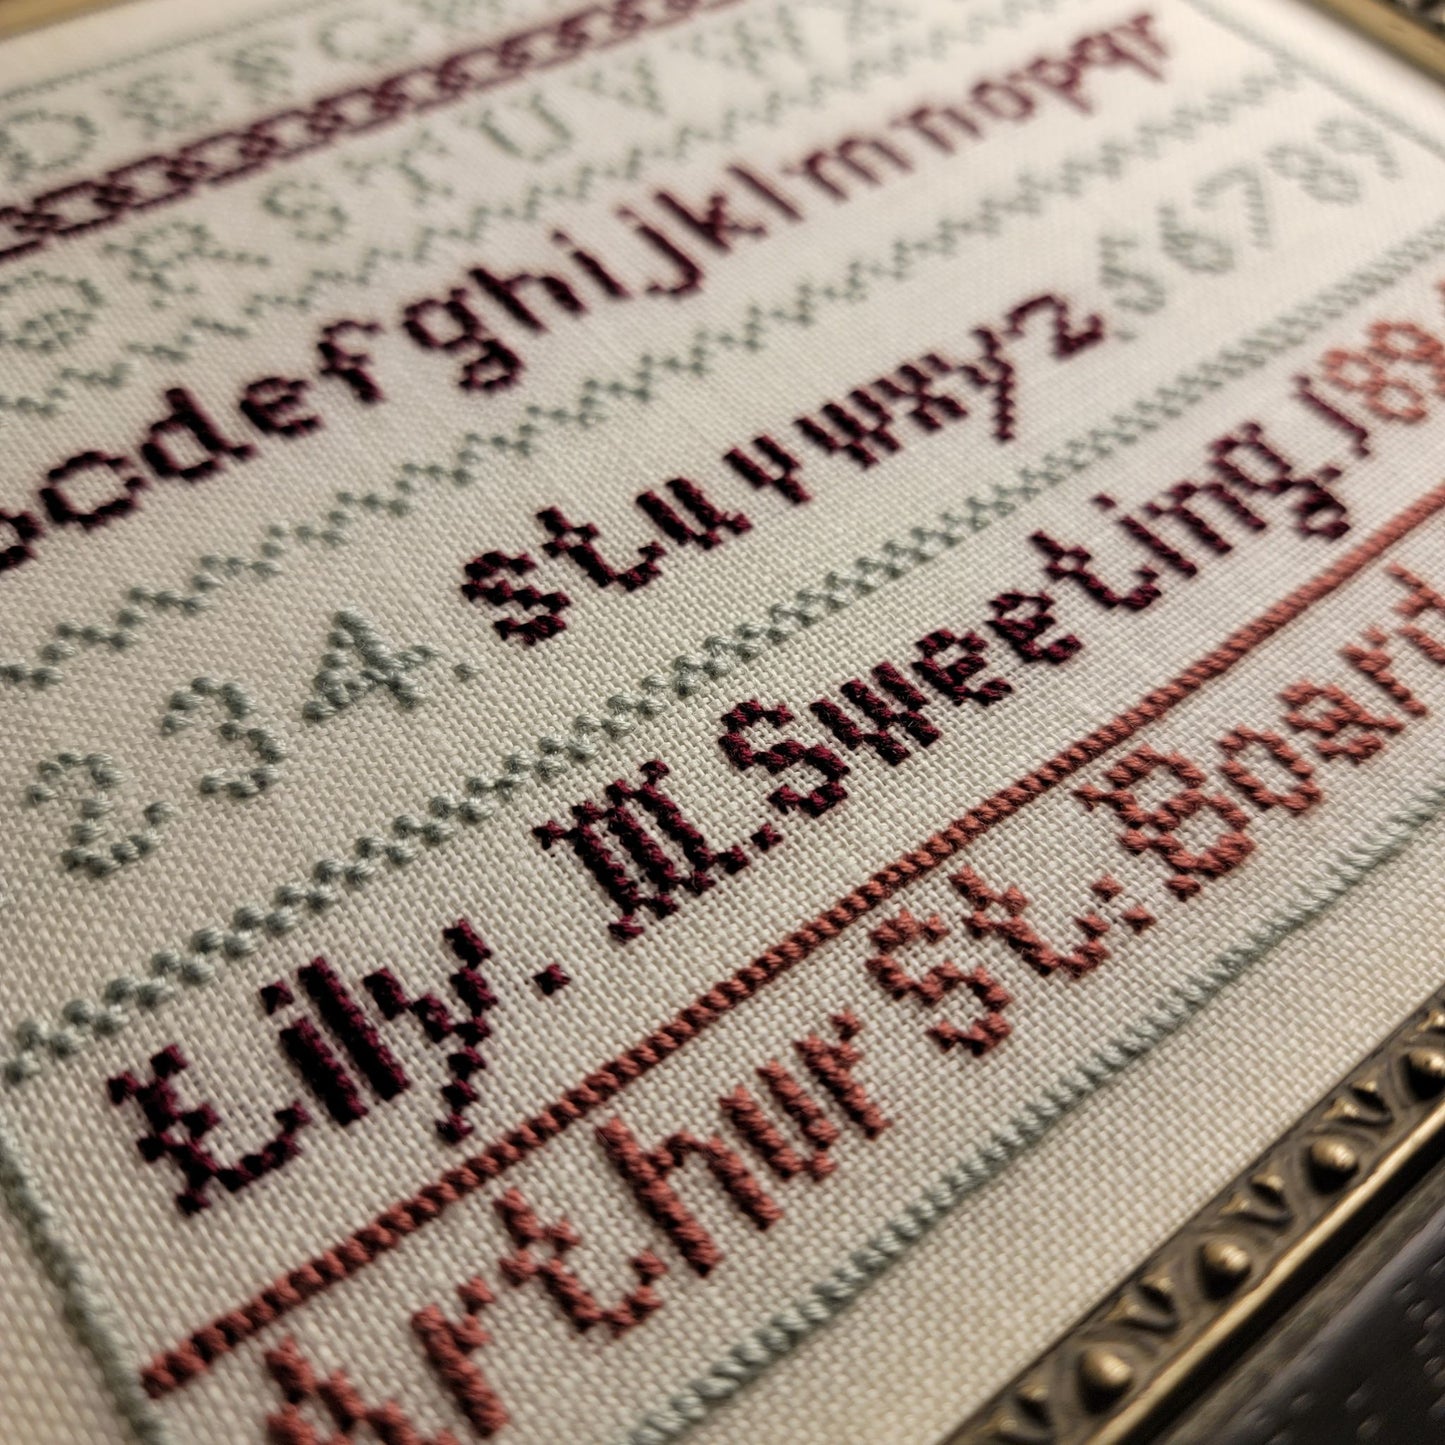 Lily M. Sweeting 1895 Sampler Pattern